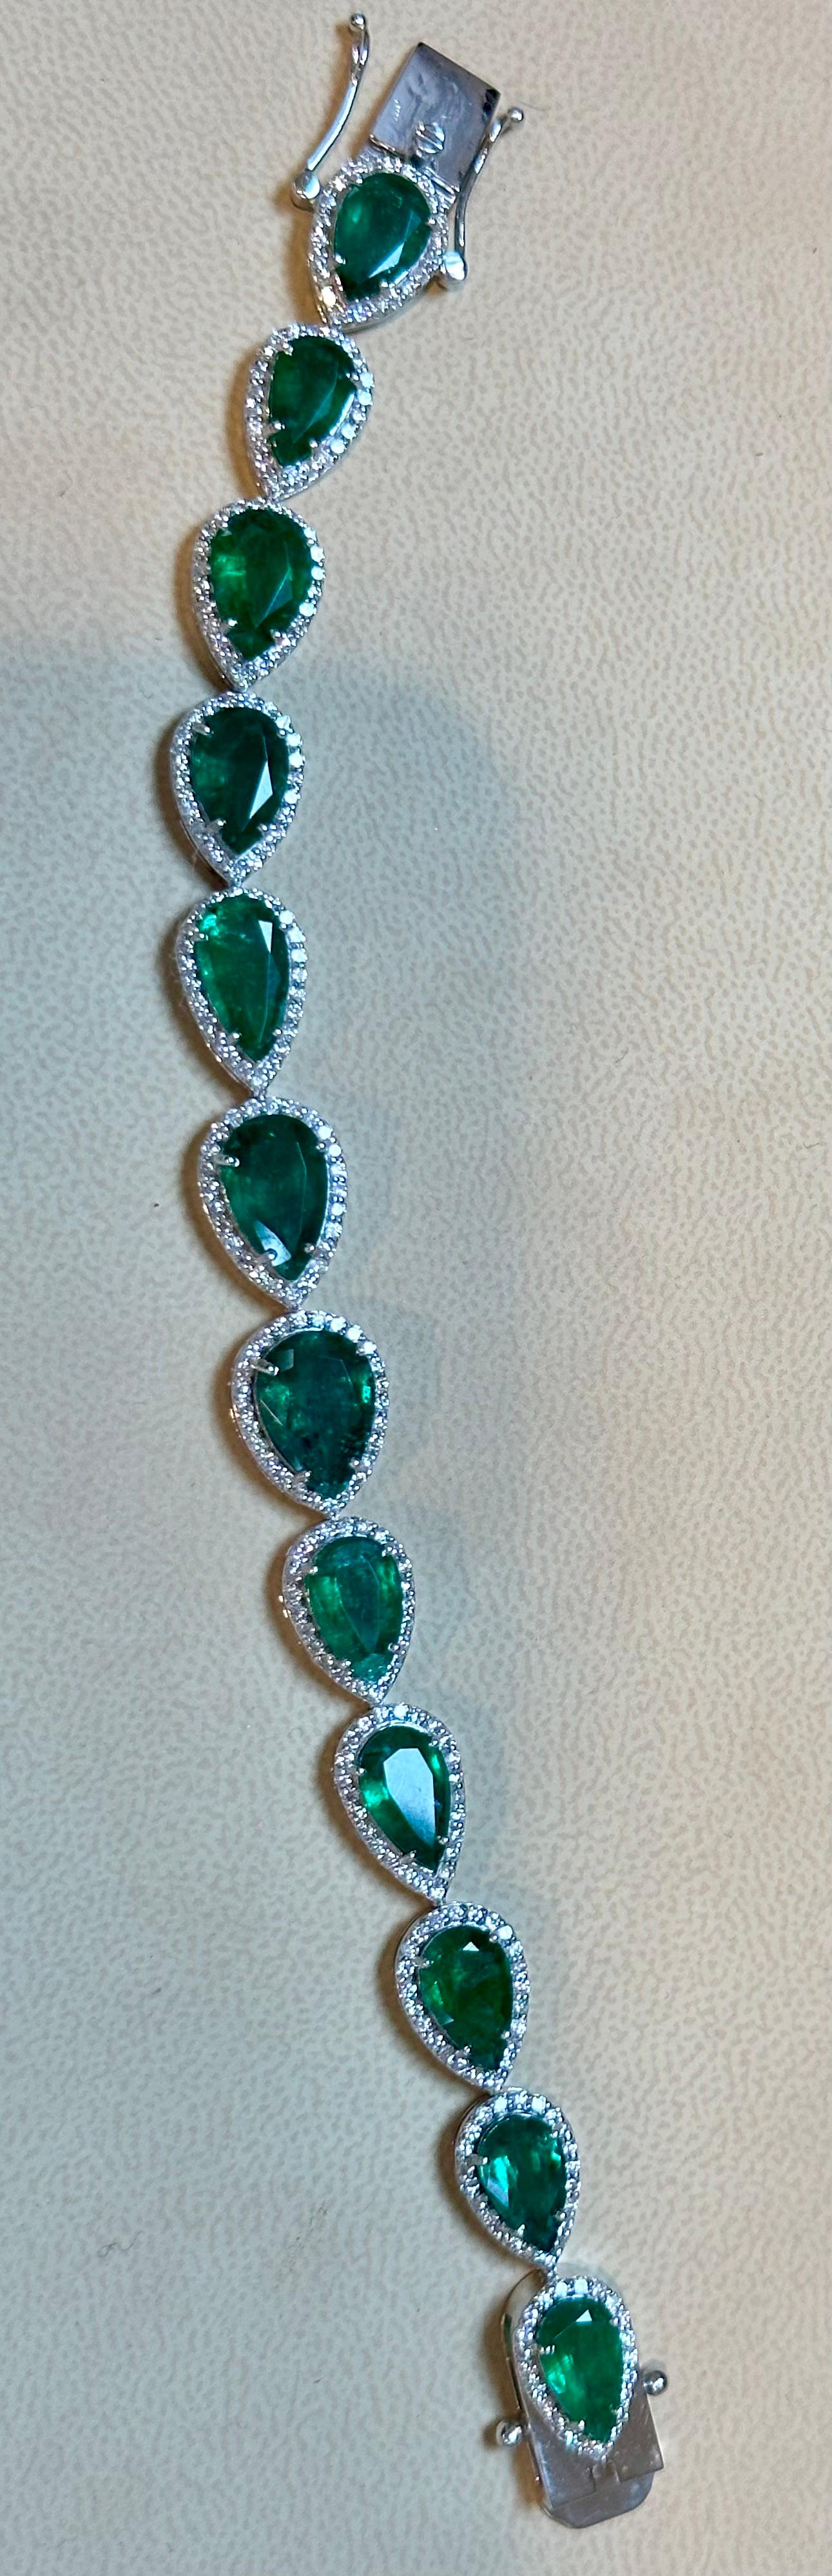 28 Carat Natural Zambian Emerald & Diamond Tennis Bracelet 14 Karat White Gold For Sale 2